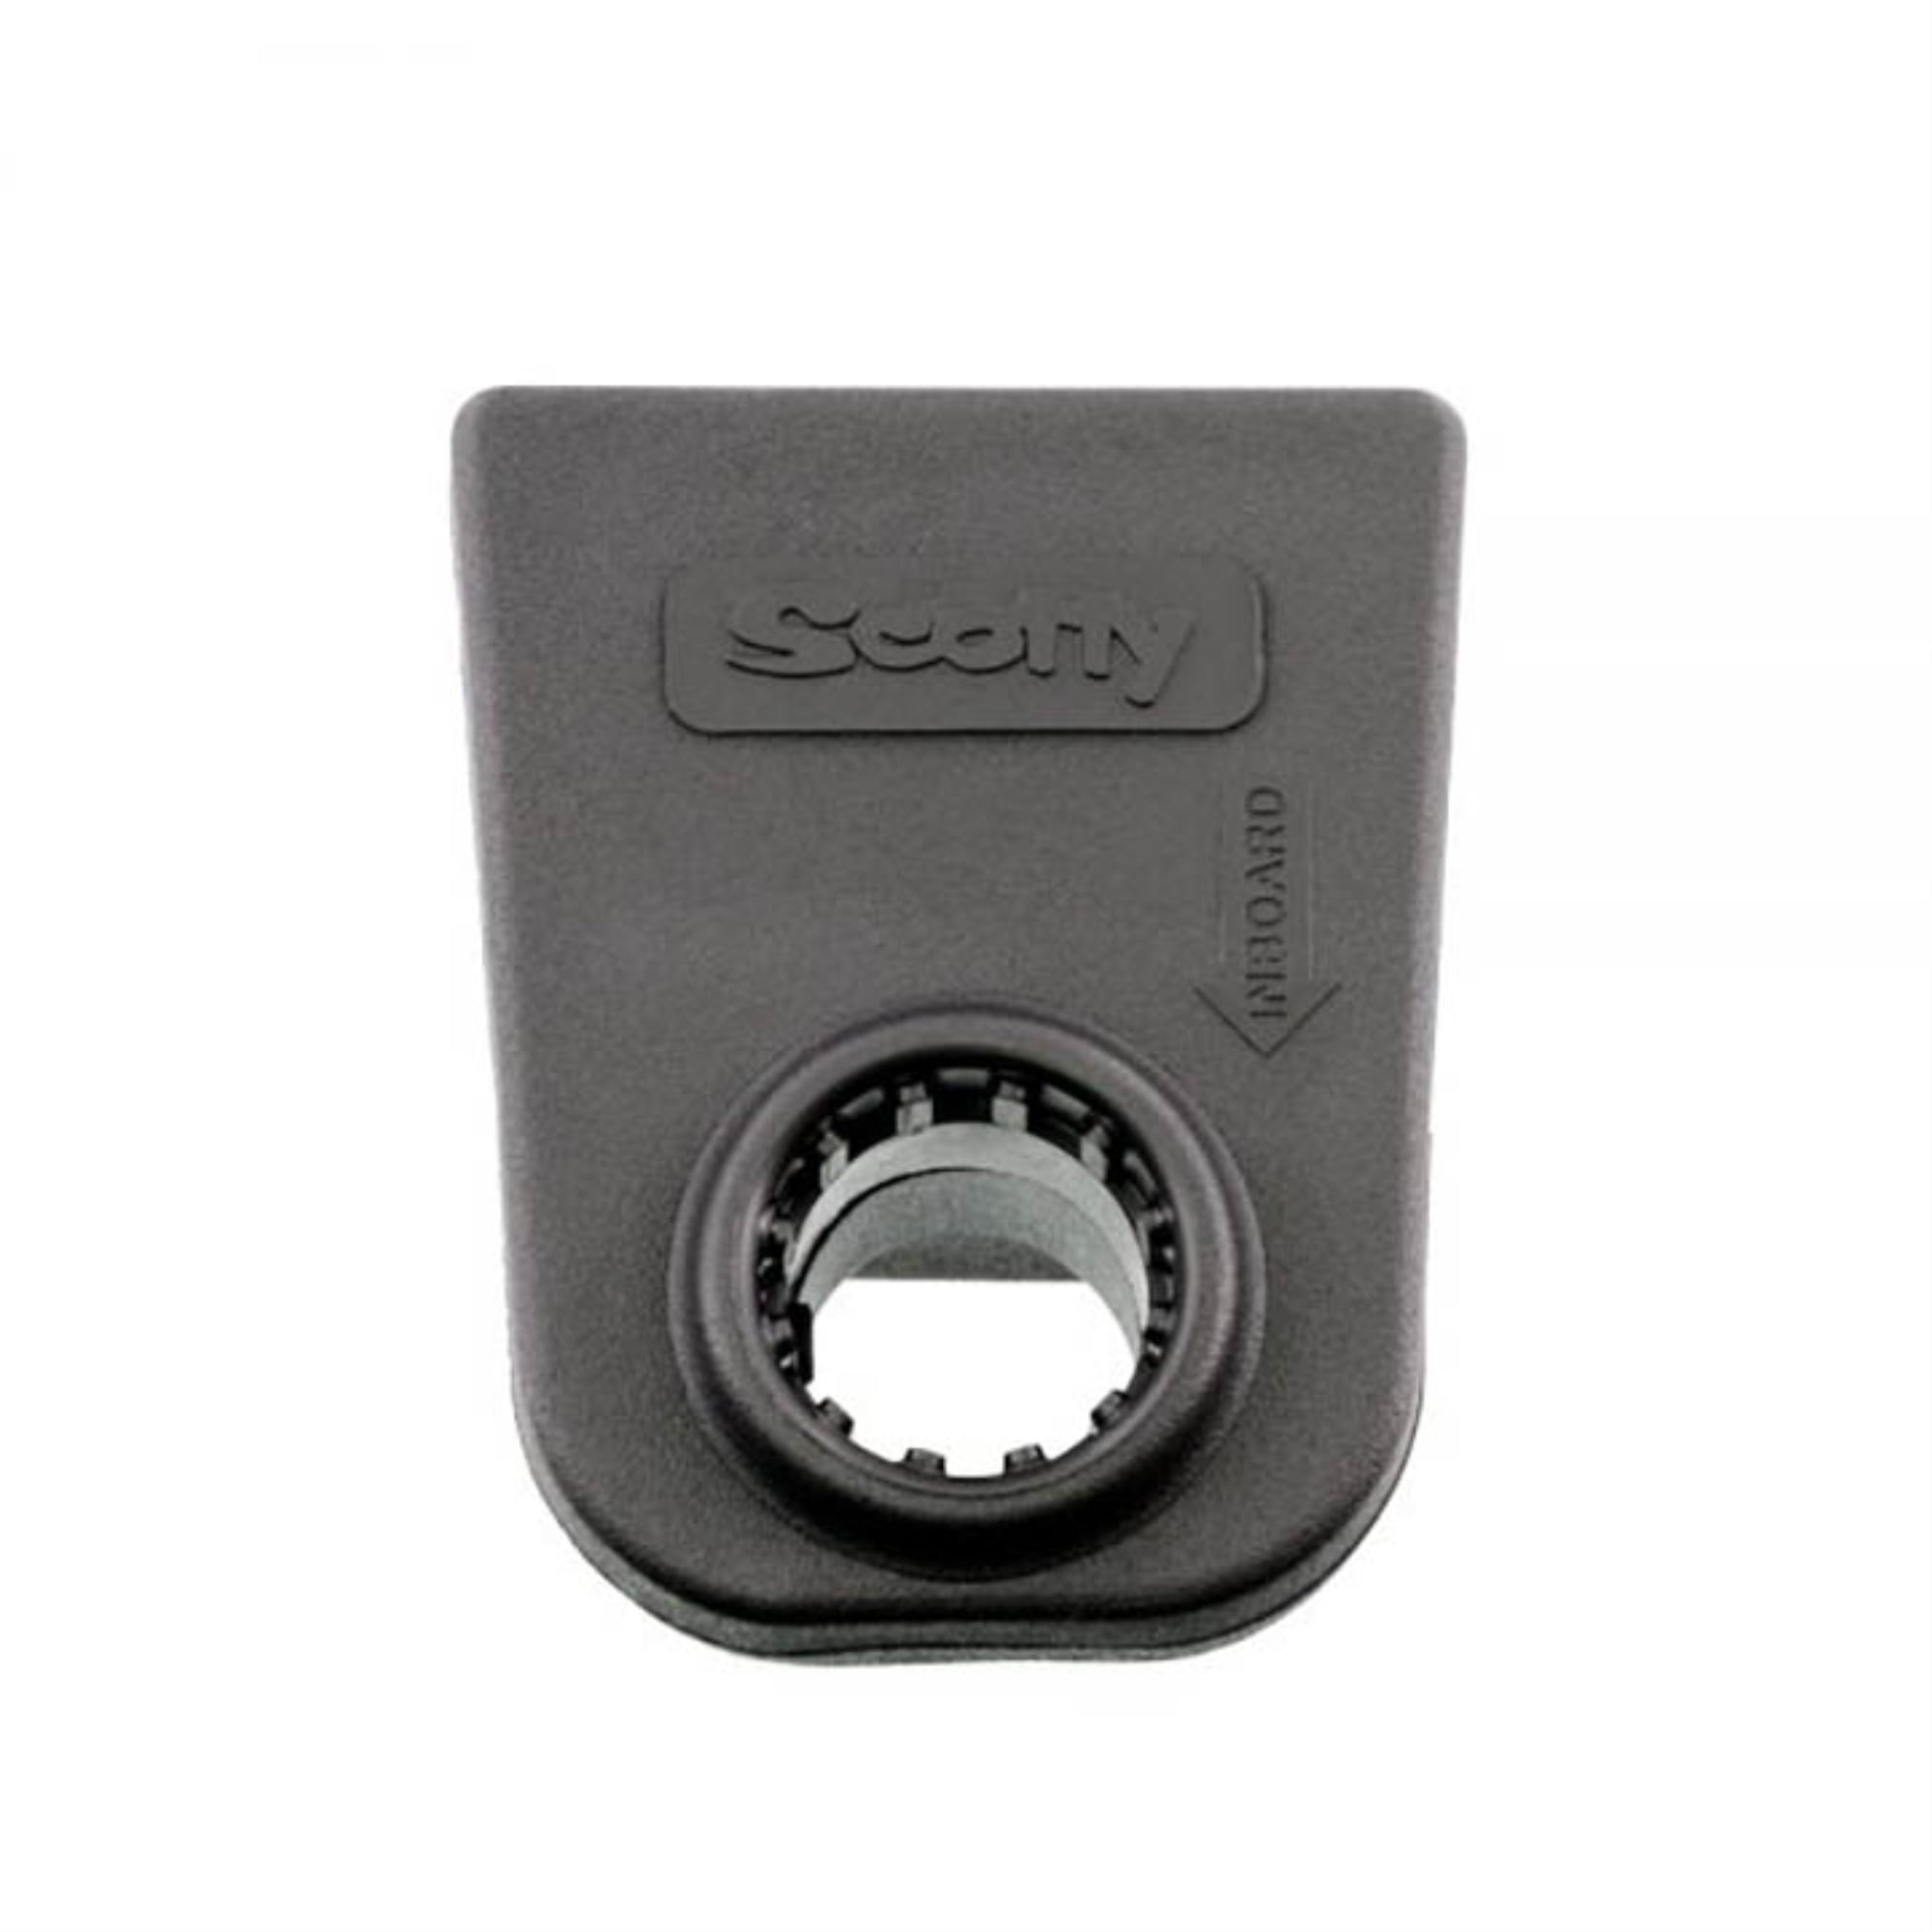 Scotty Compact Universal Sounder Fishfinder Mount Adjustable Rotation Black 0368 